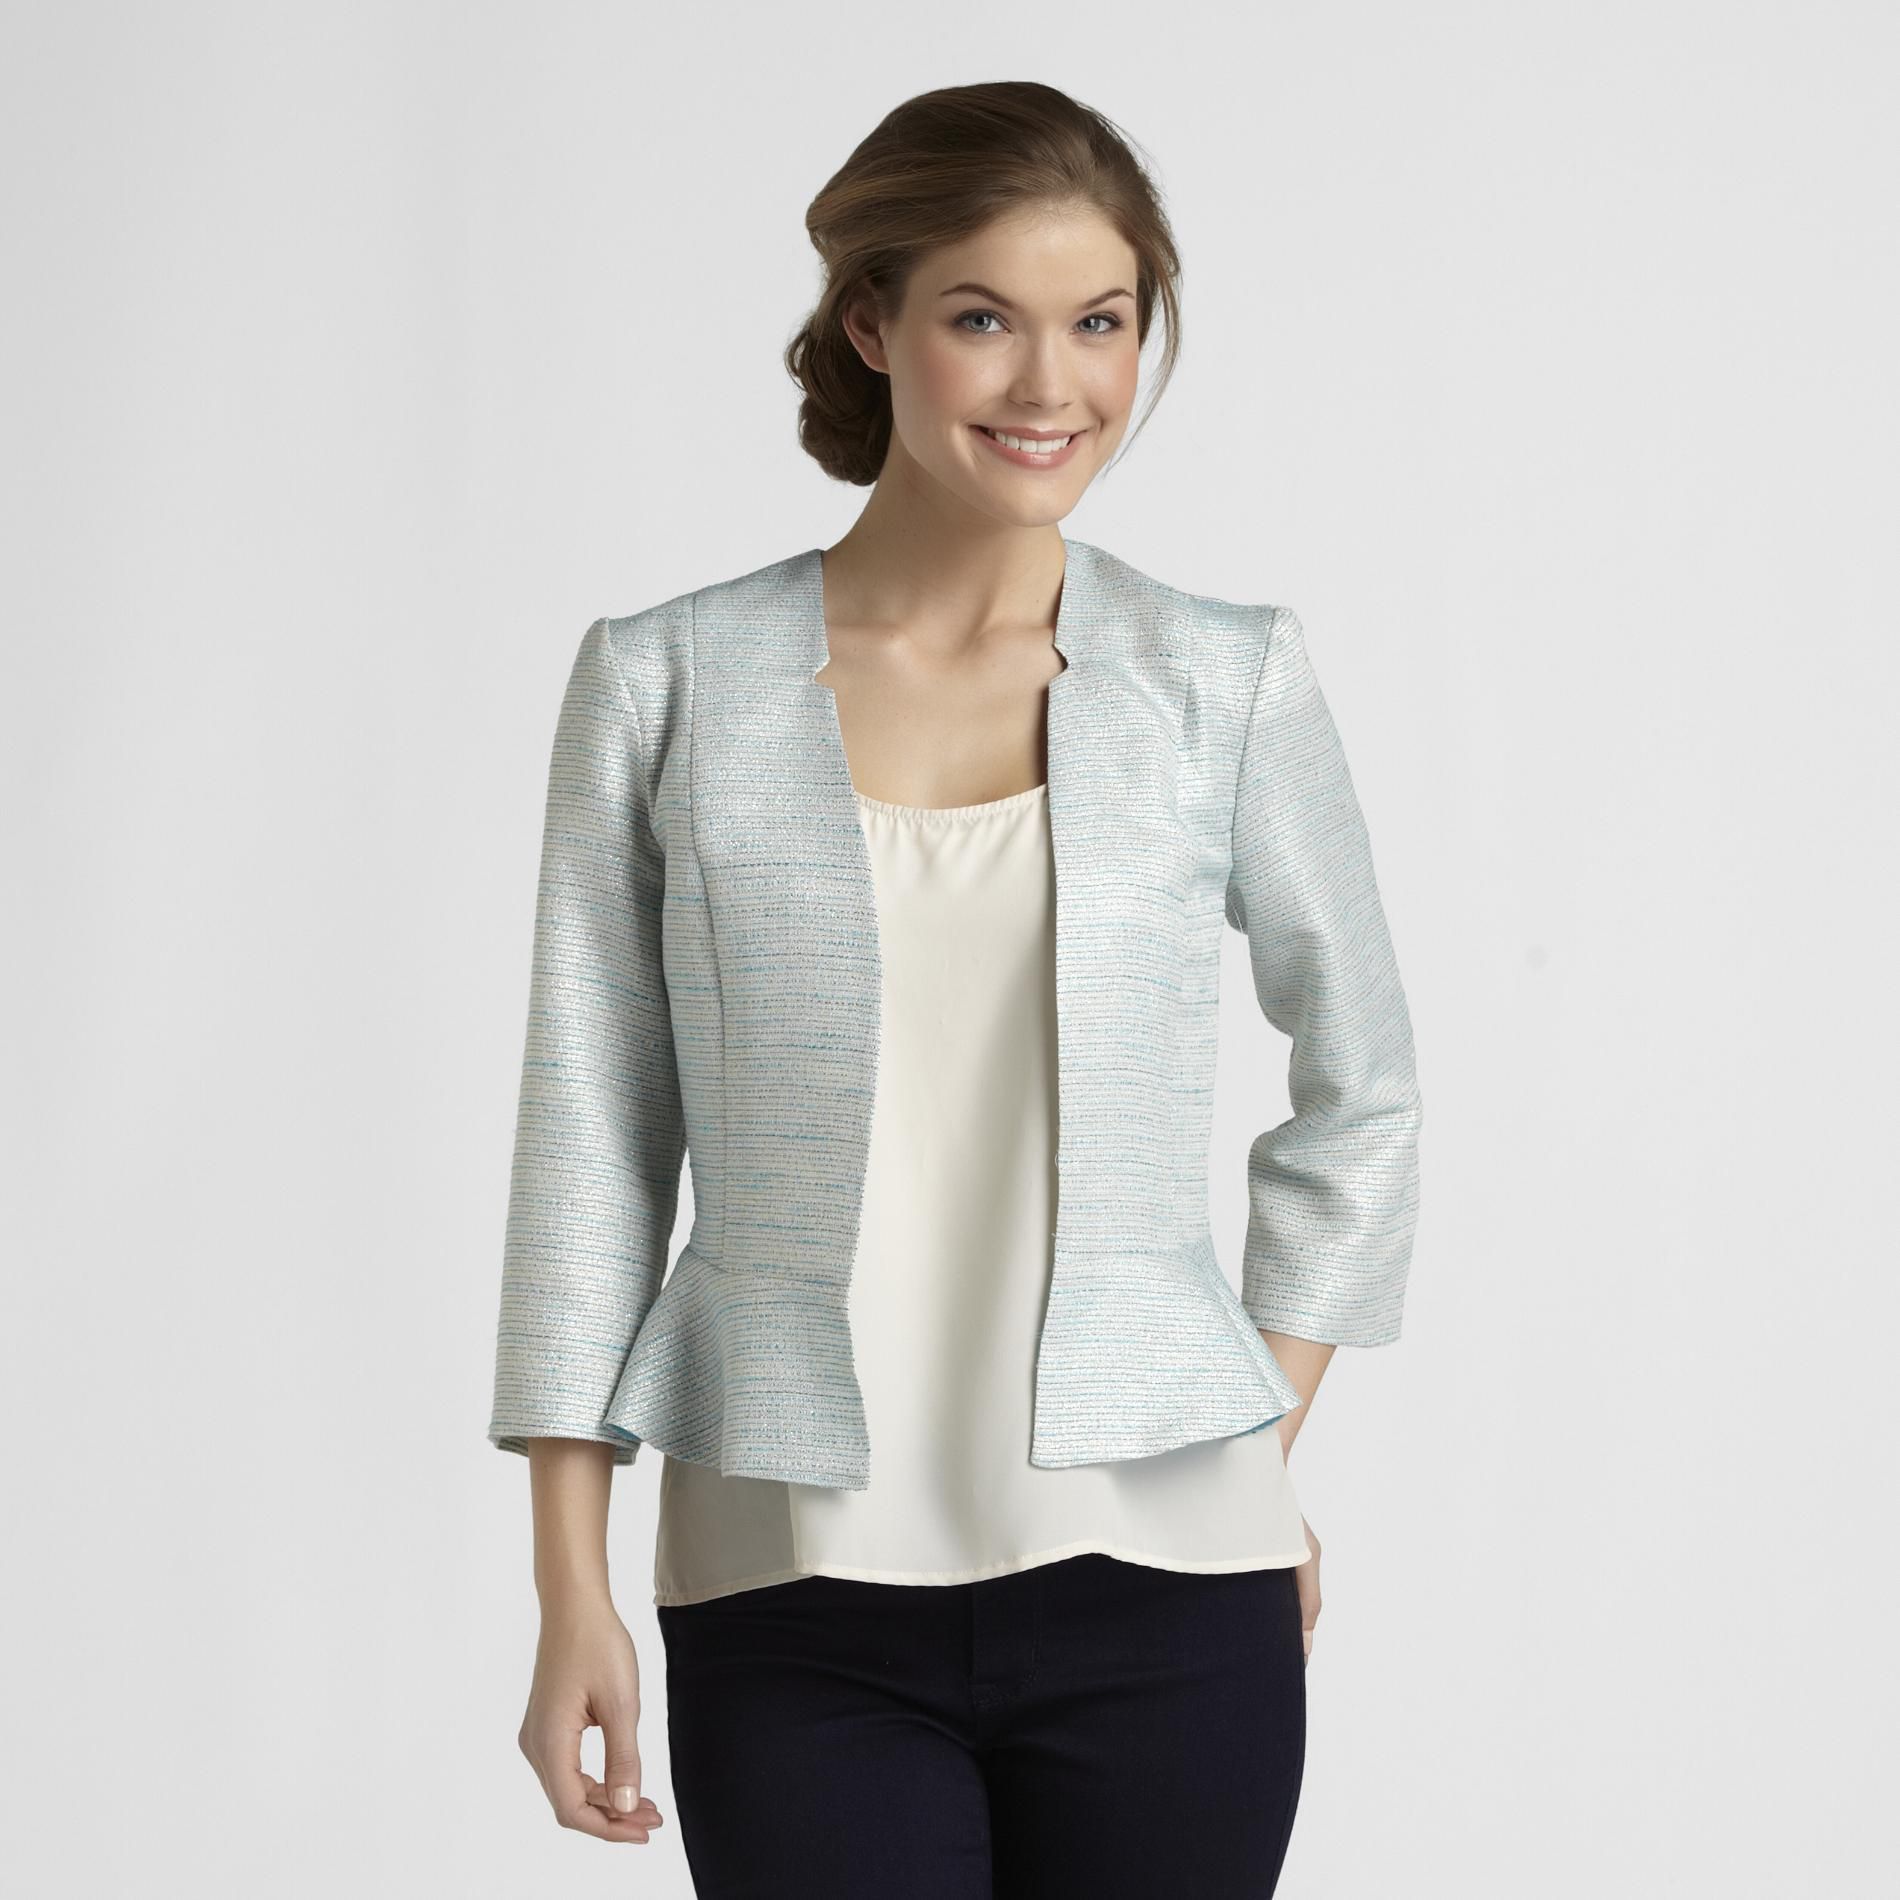 Metaphor Women's Shiny Tweed Jacket